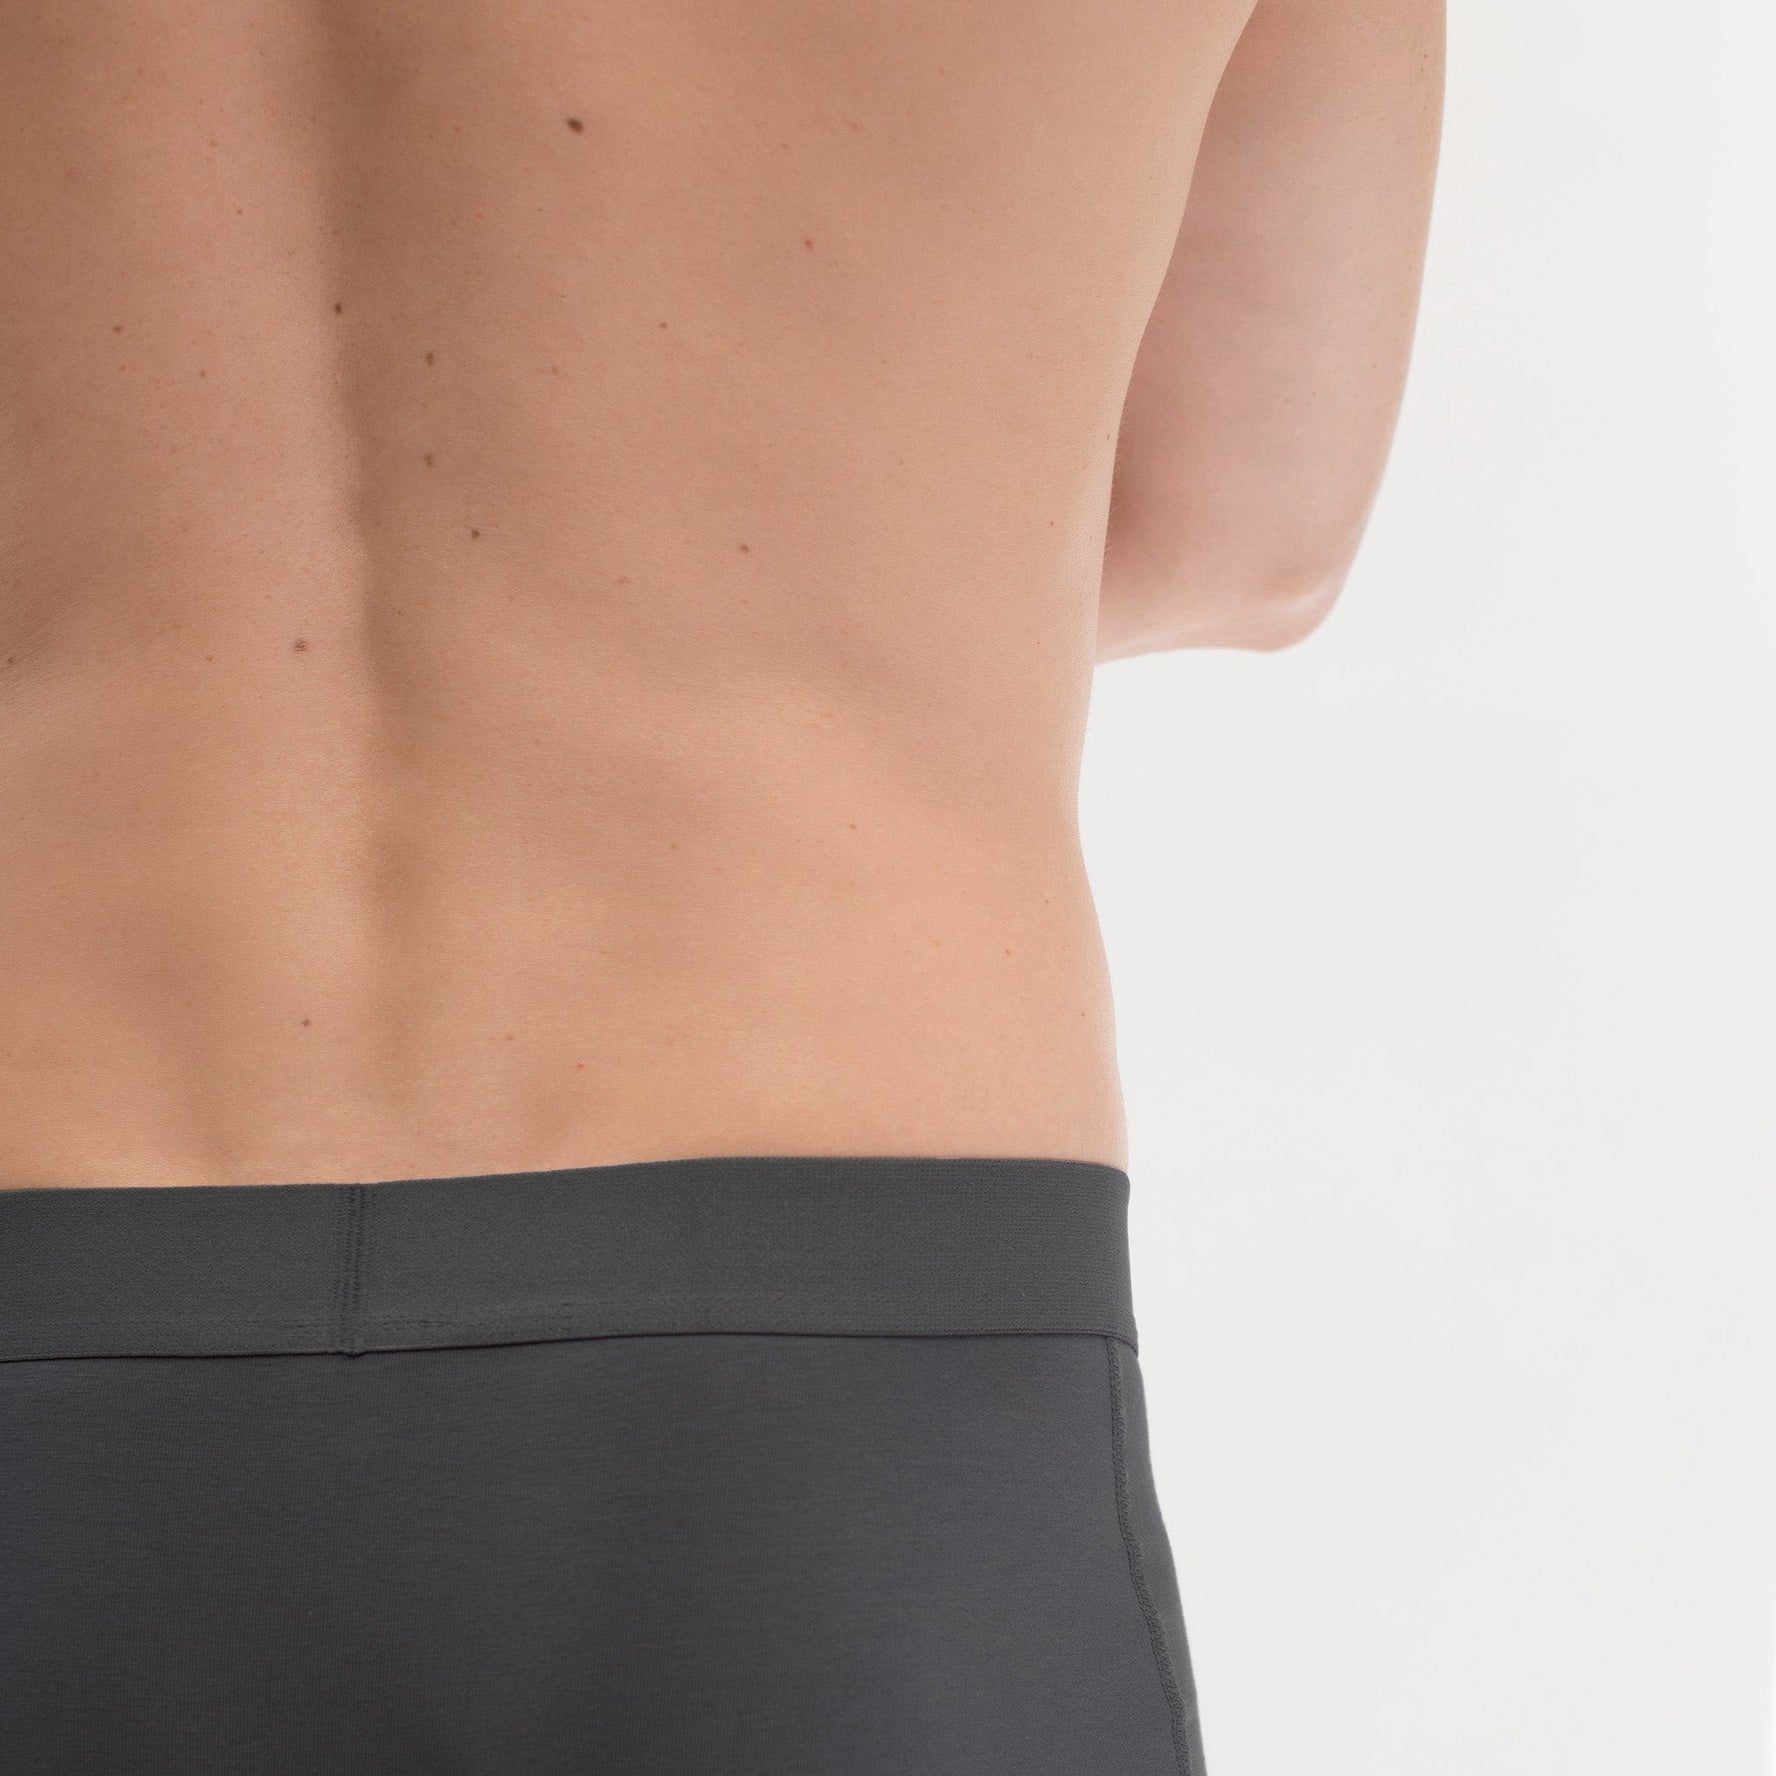 Media espalda inferior masculina - Clínica Belenus